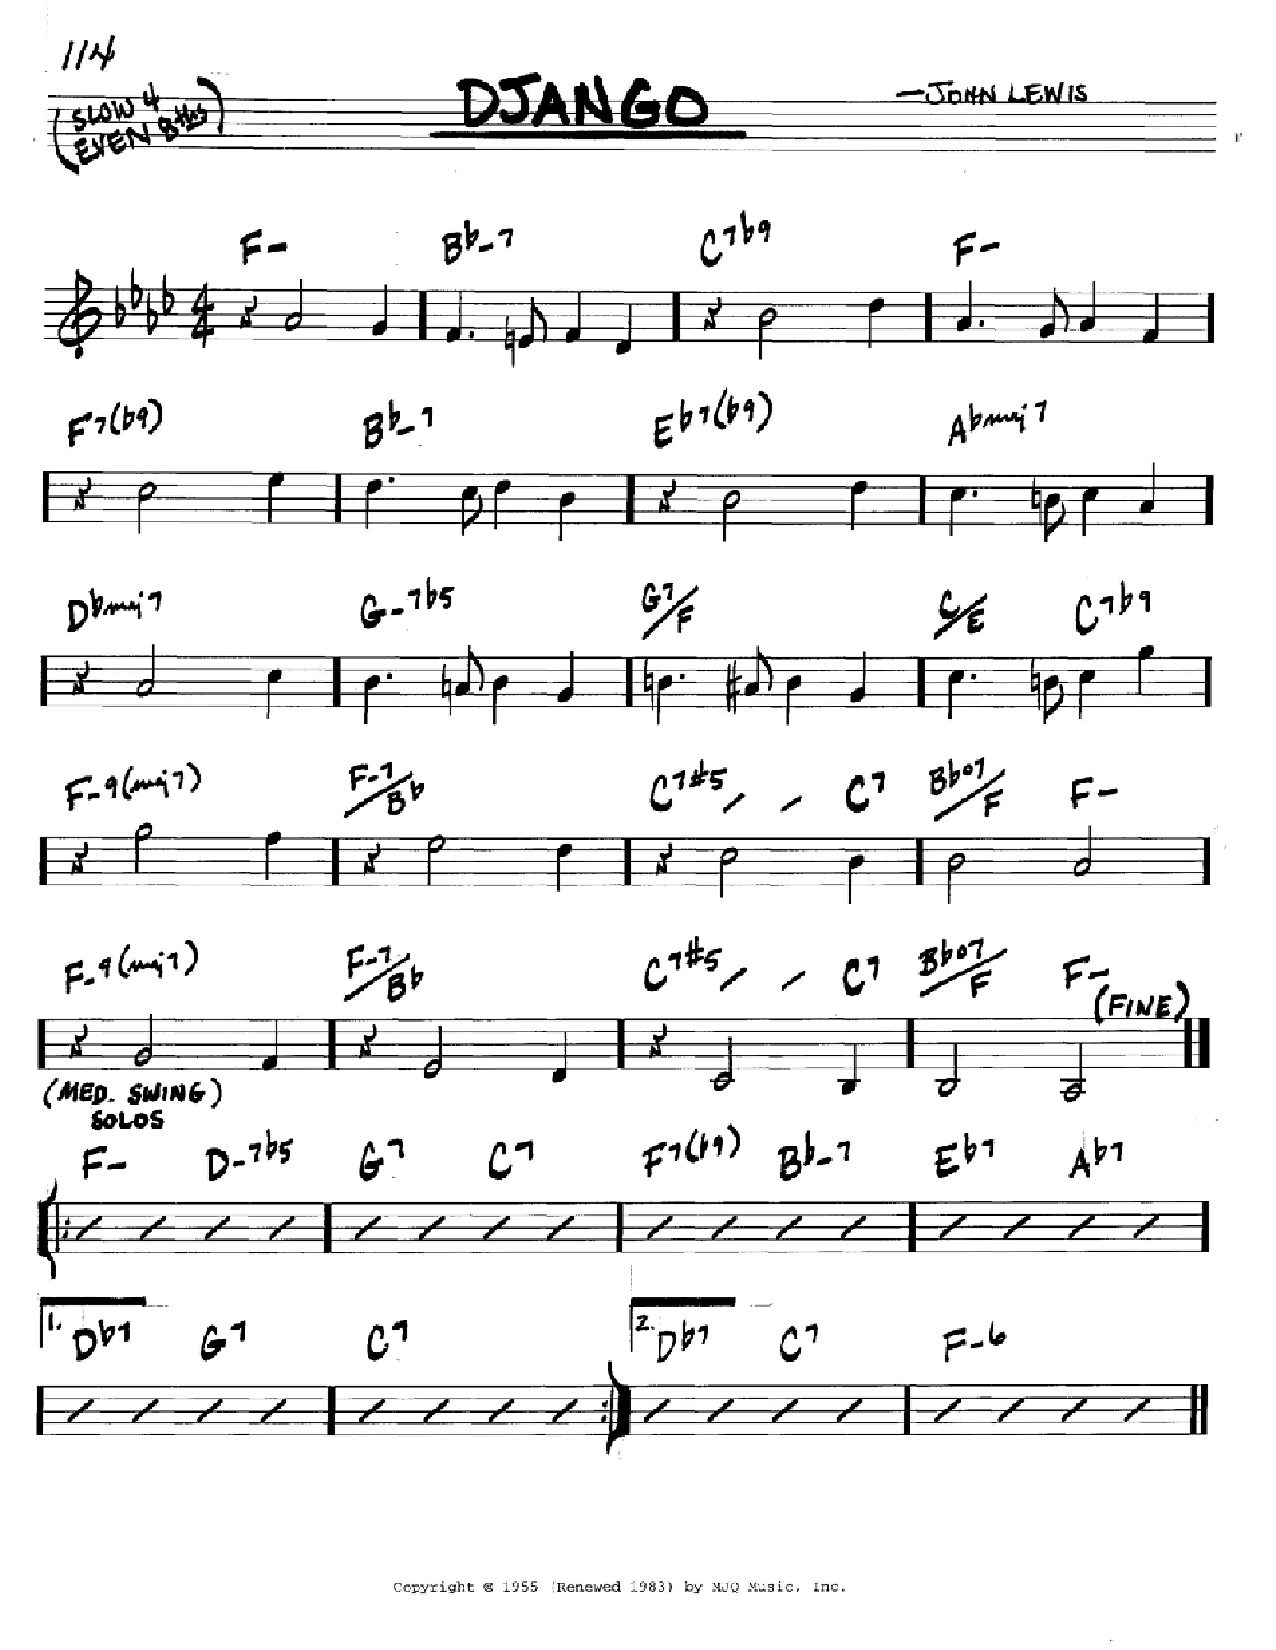 John Lewis Django sheet music notes and chords arranged for Lead Sheet / Fake Book